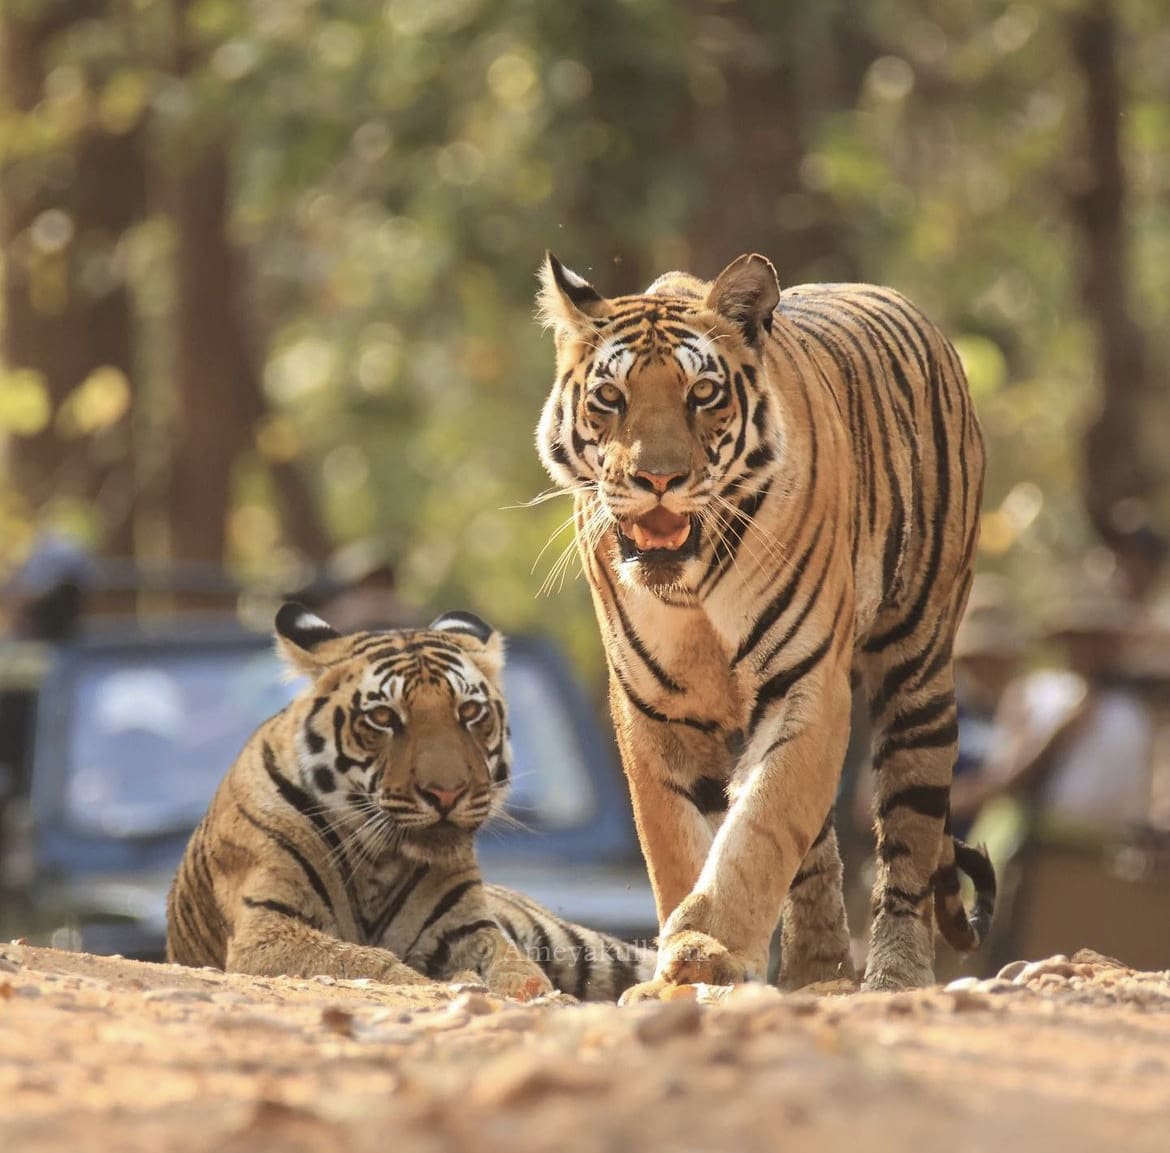 Tigress and her cub